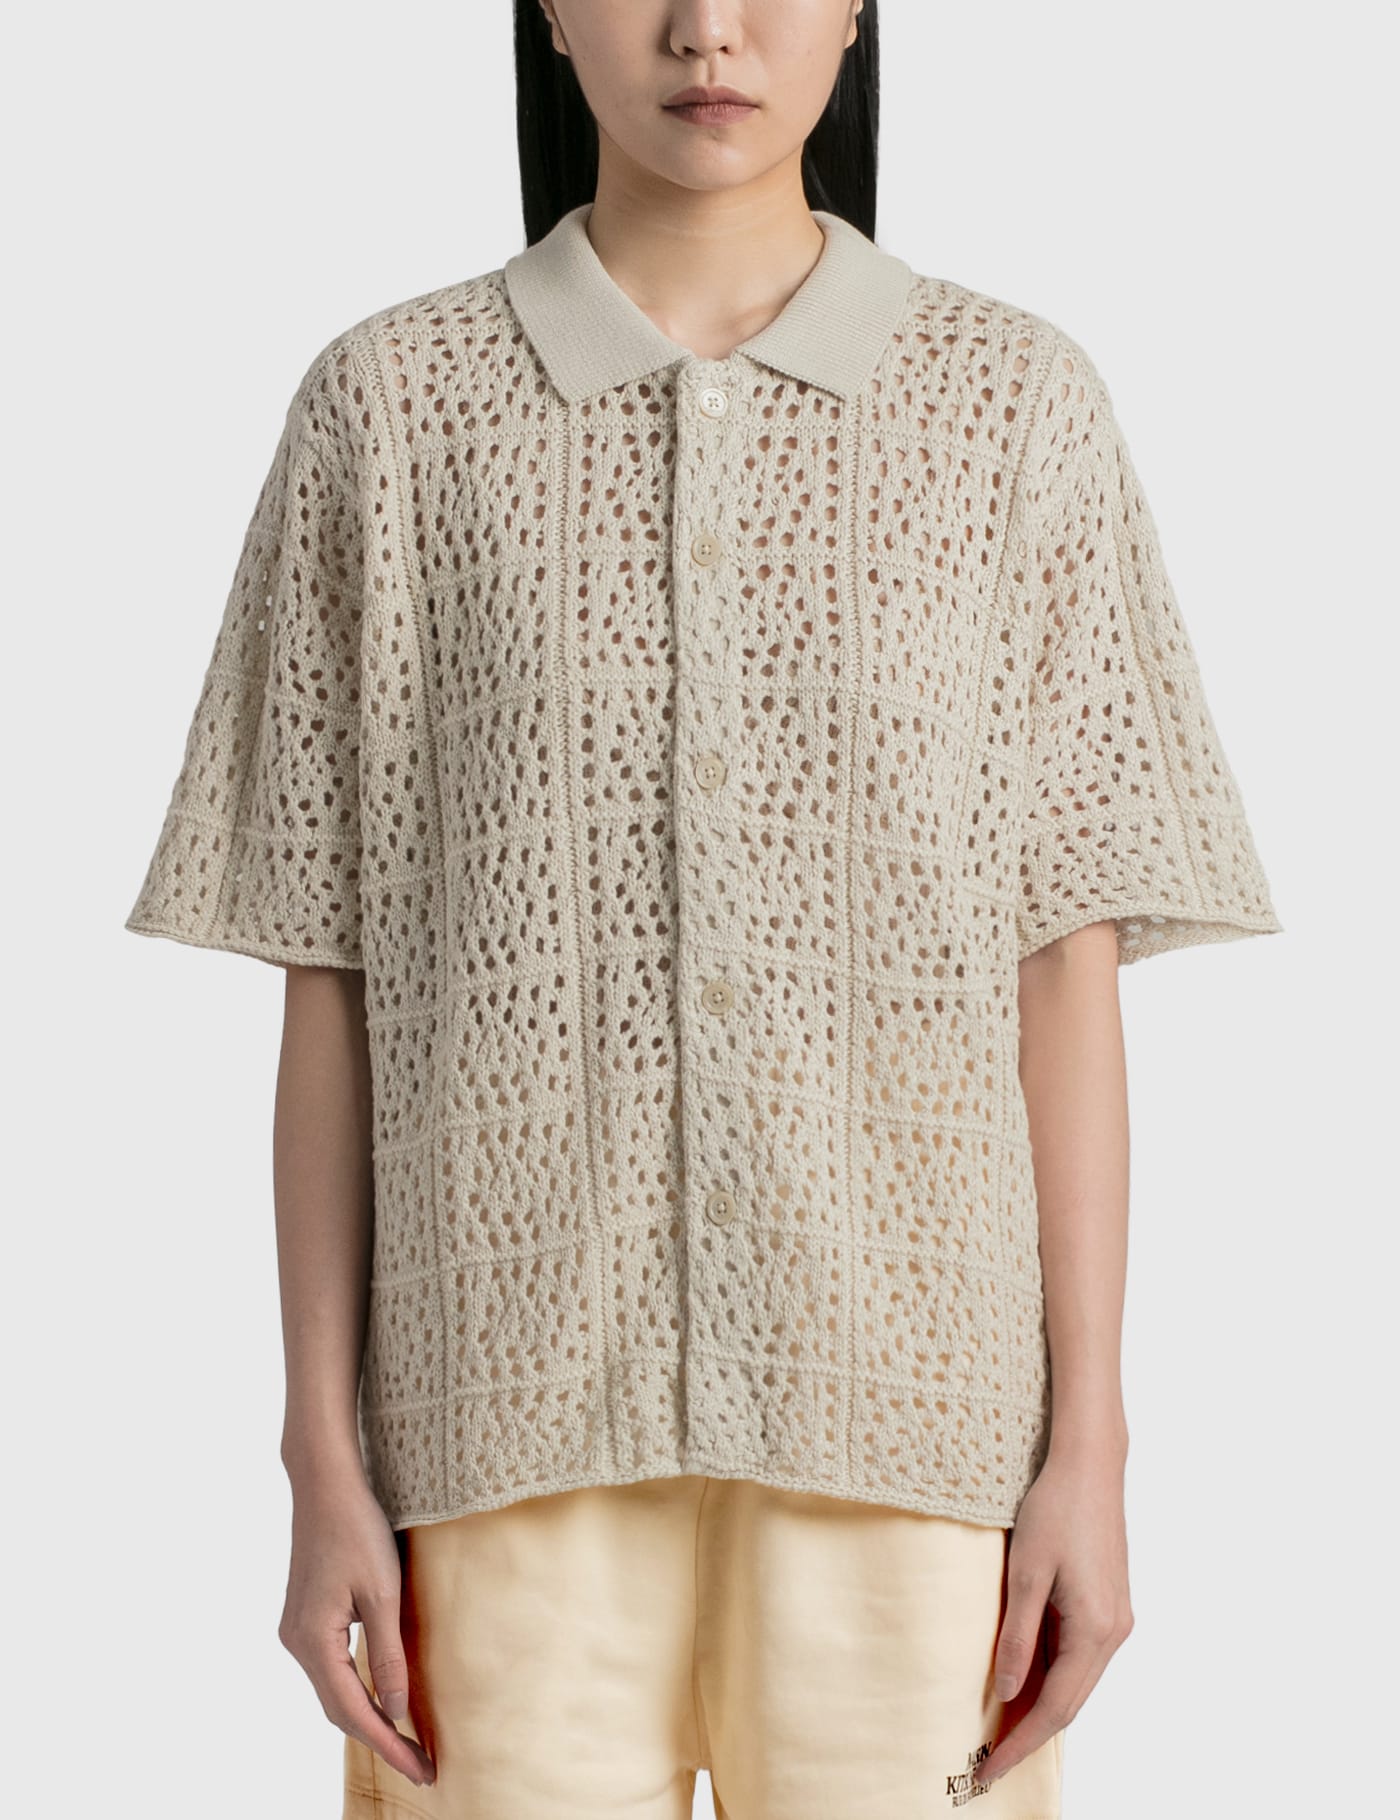 discount 67% Kilky blouse Black WOMEN FASHION Shirts & T-shirts Crochet 